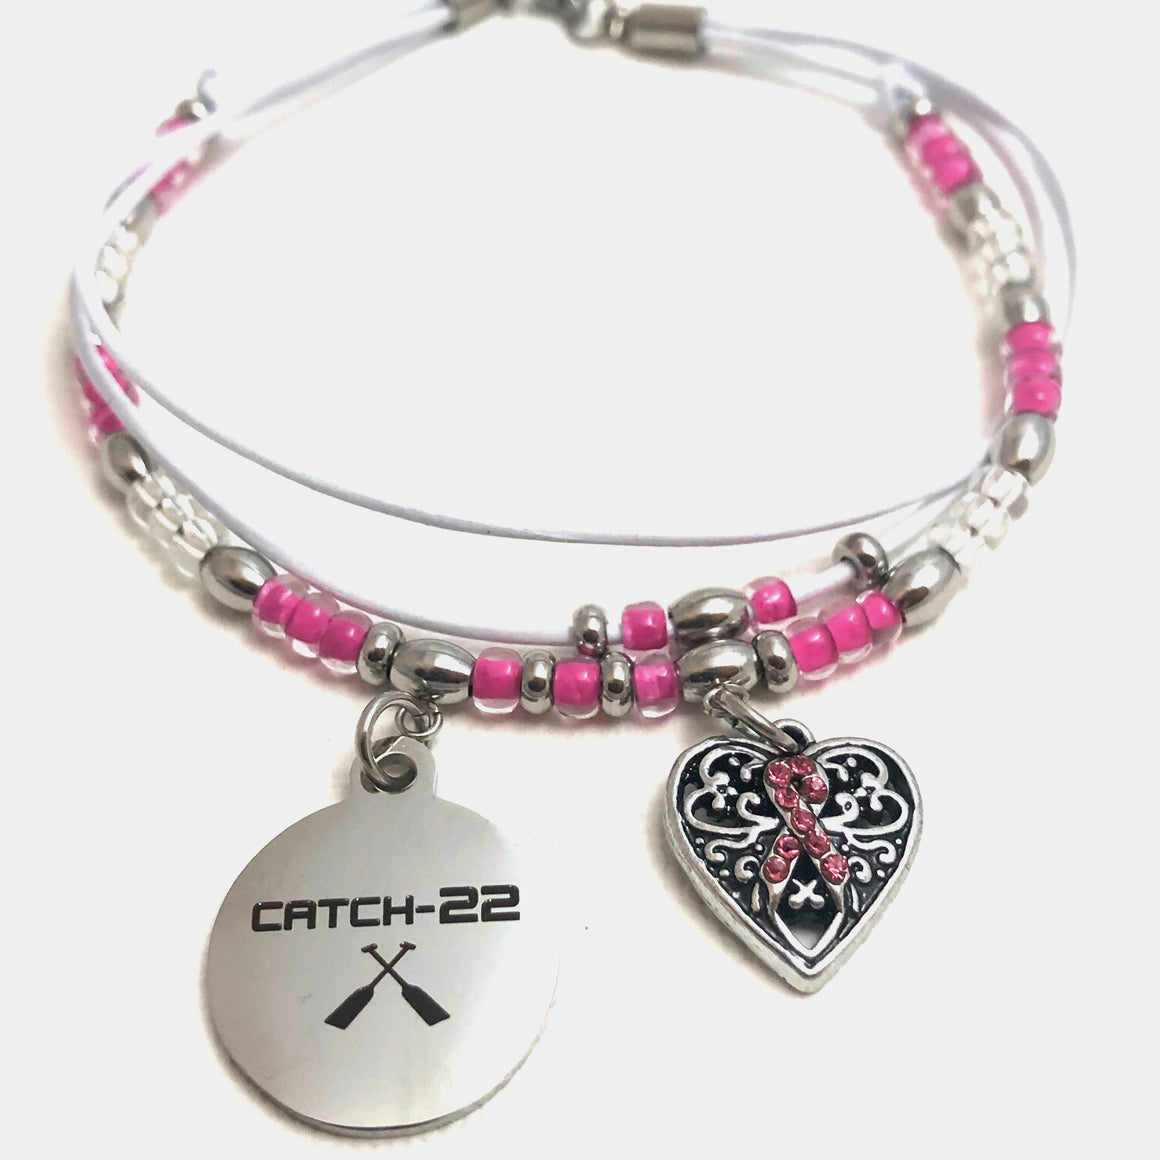 Catch-22 Layered Beaded Ankle Bracelet Breast Cancer Survivor Pink